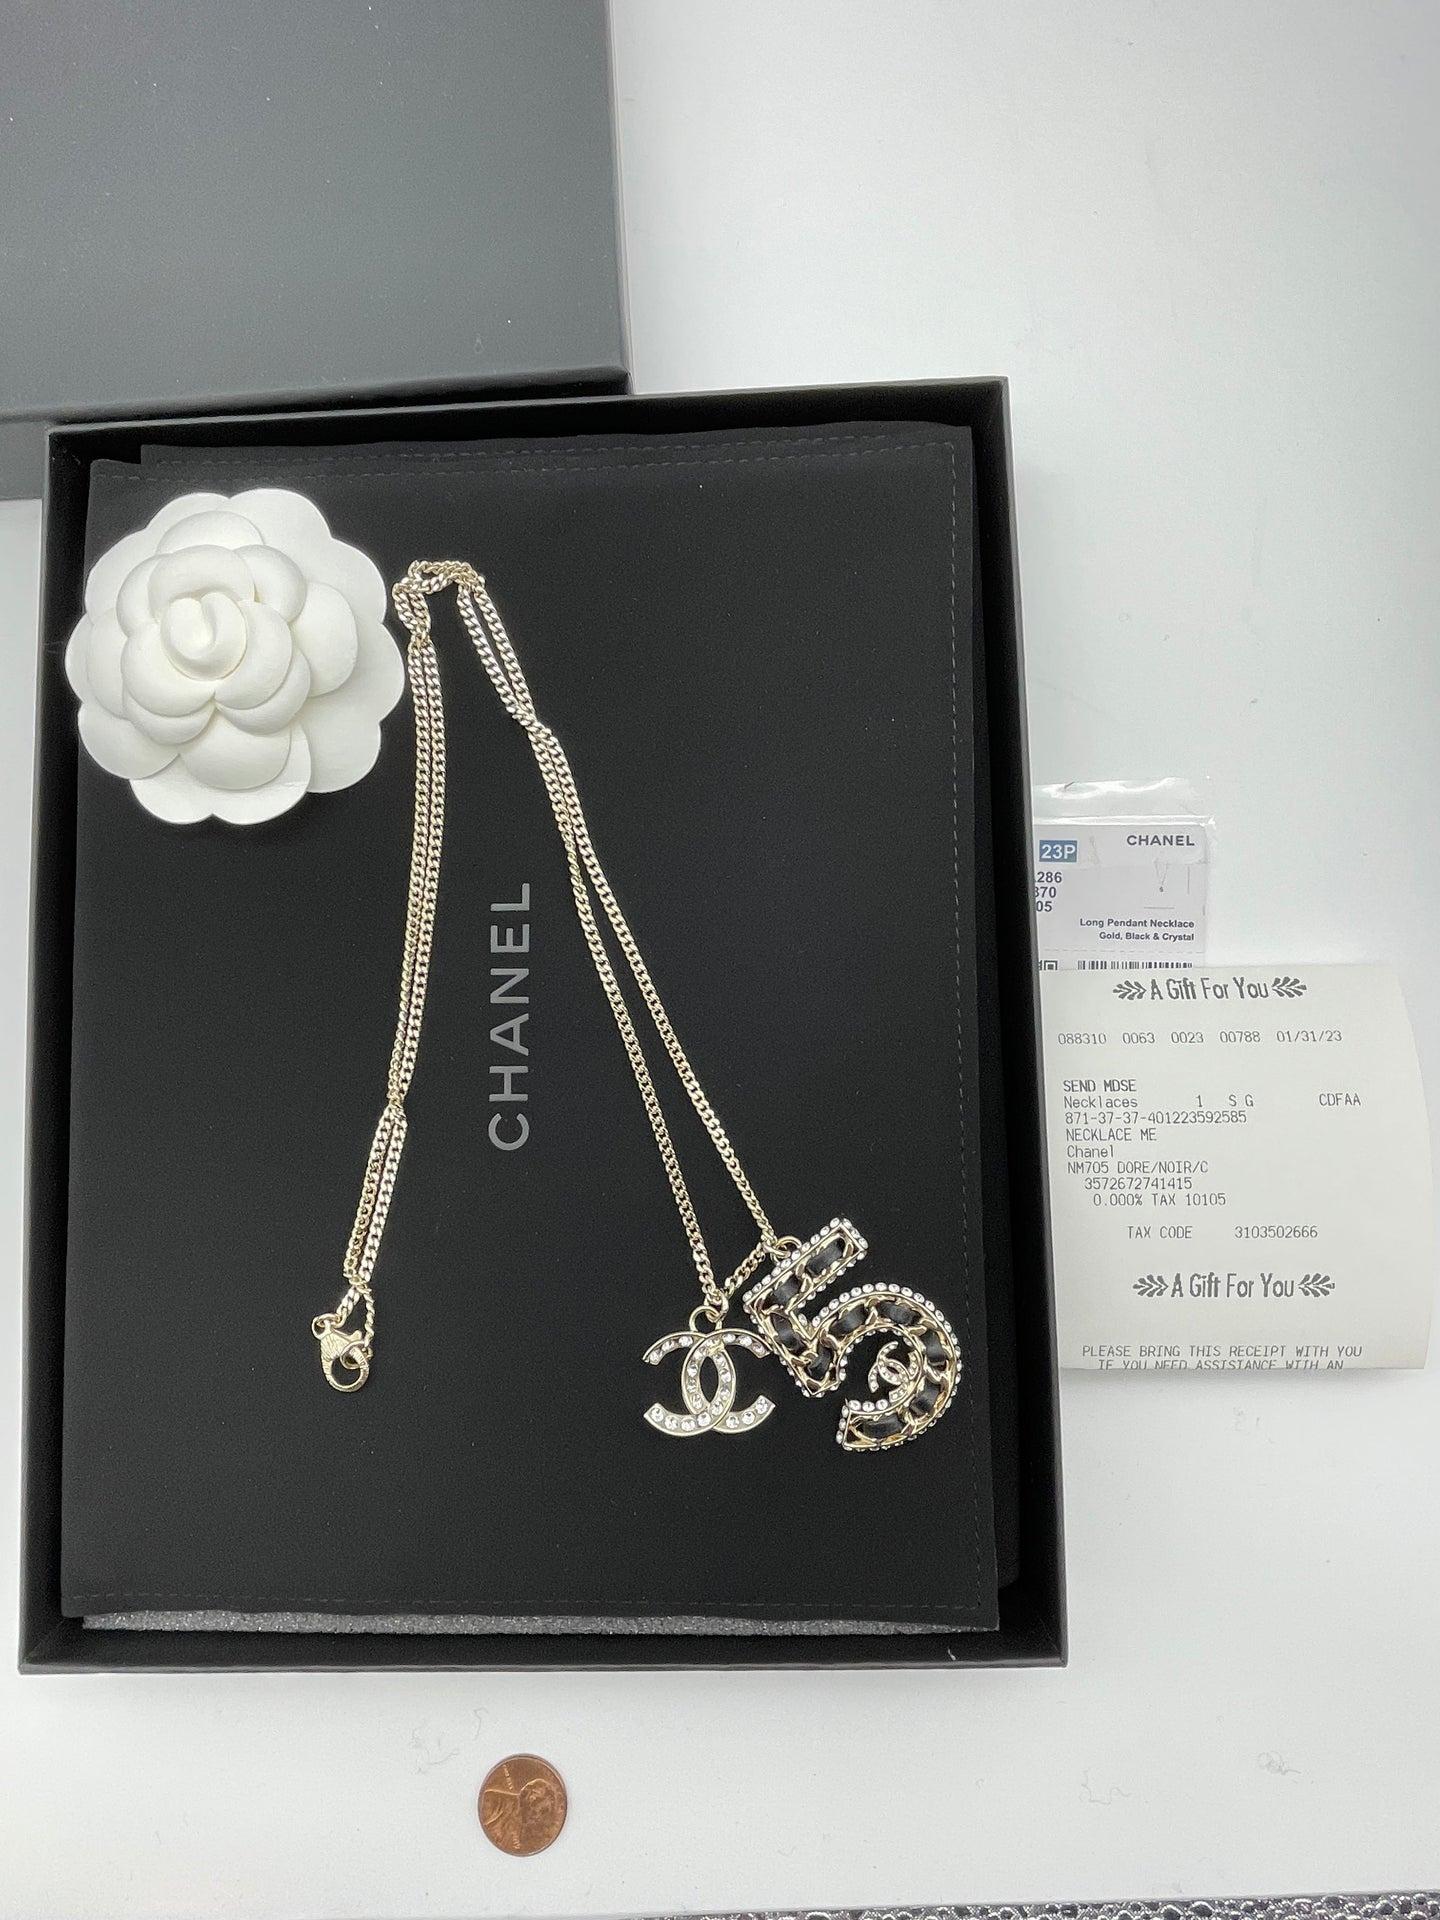 Chanel 5 & CC Long Necklace